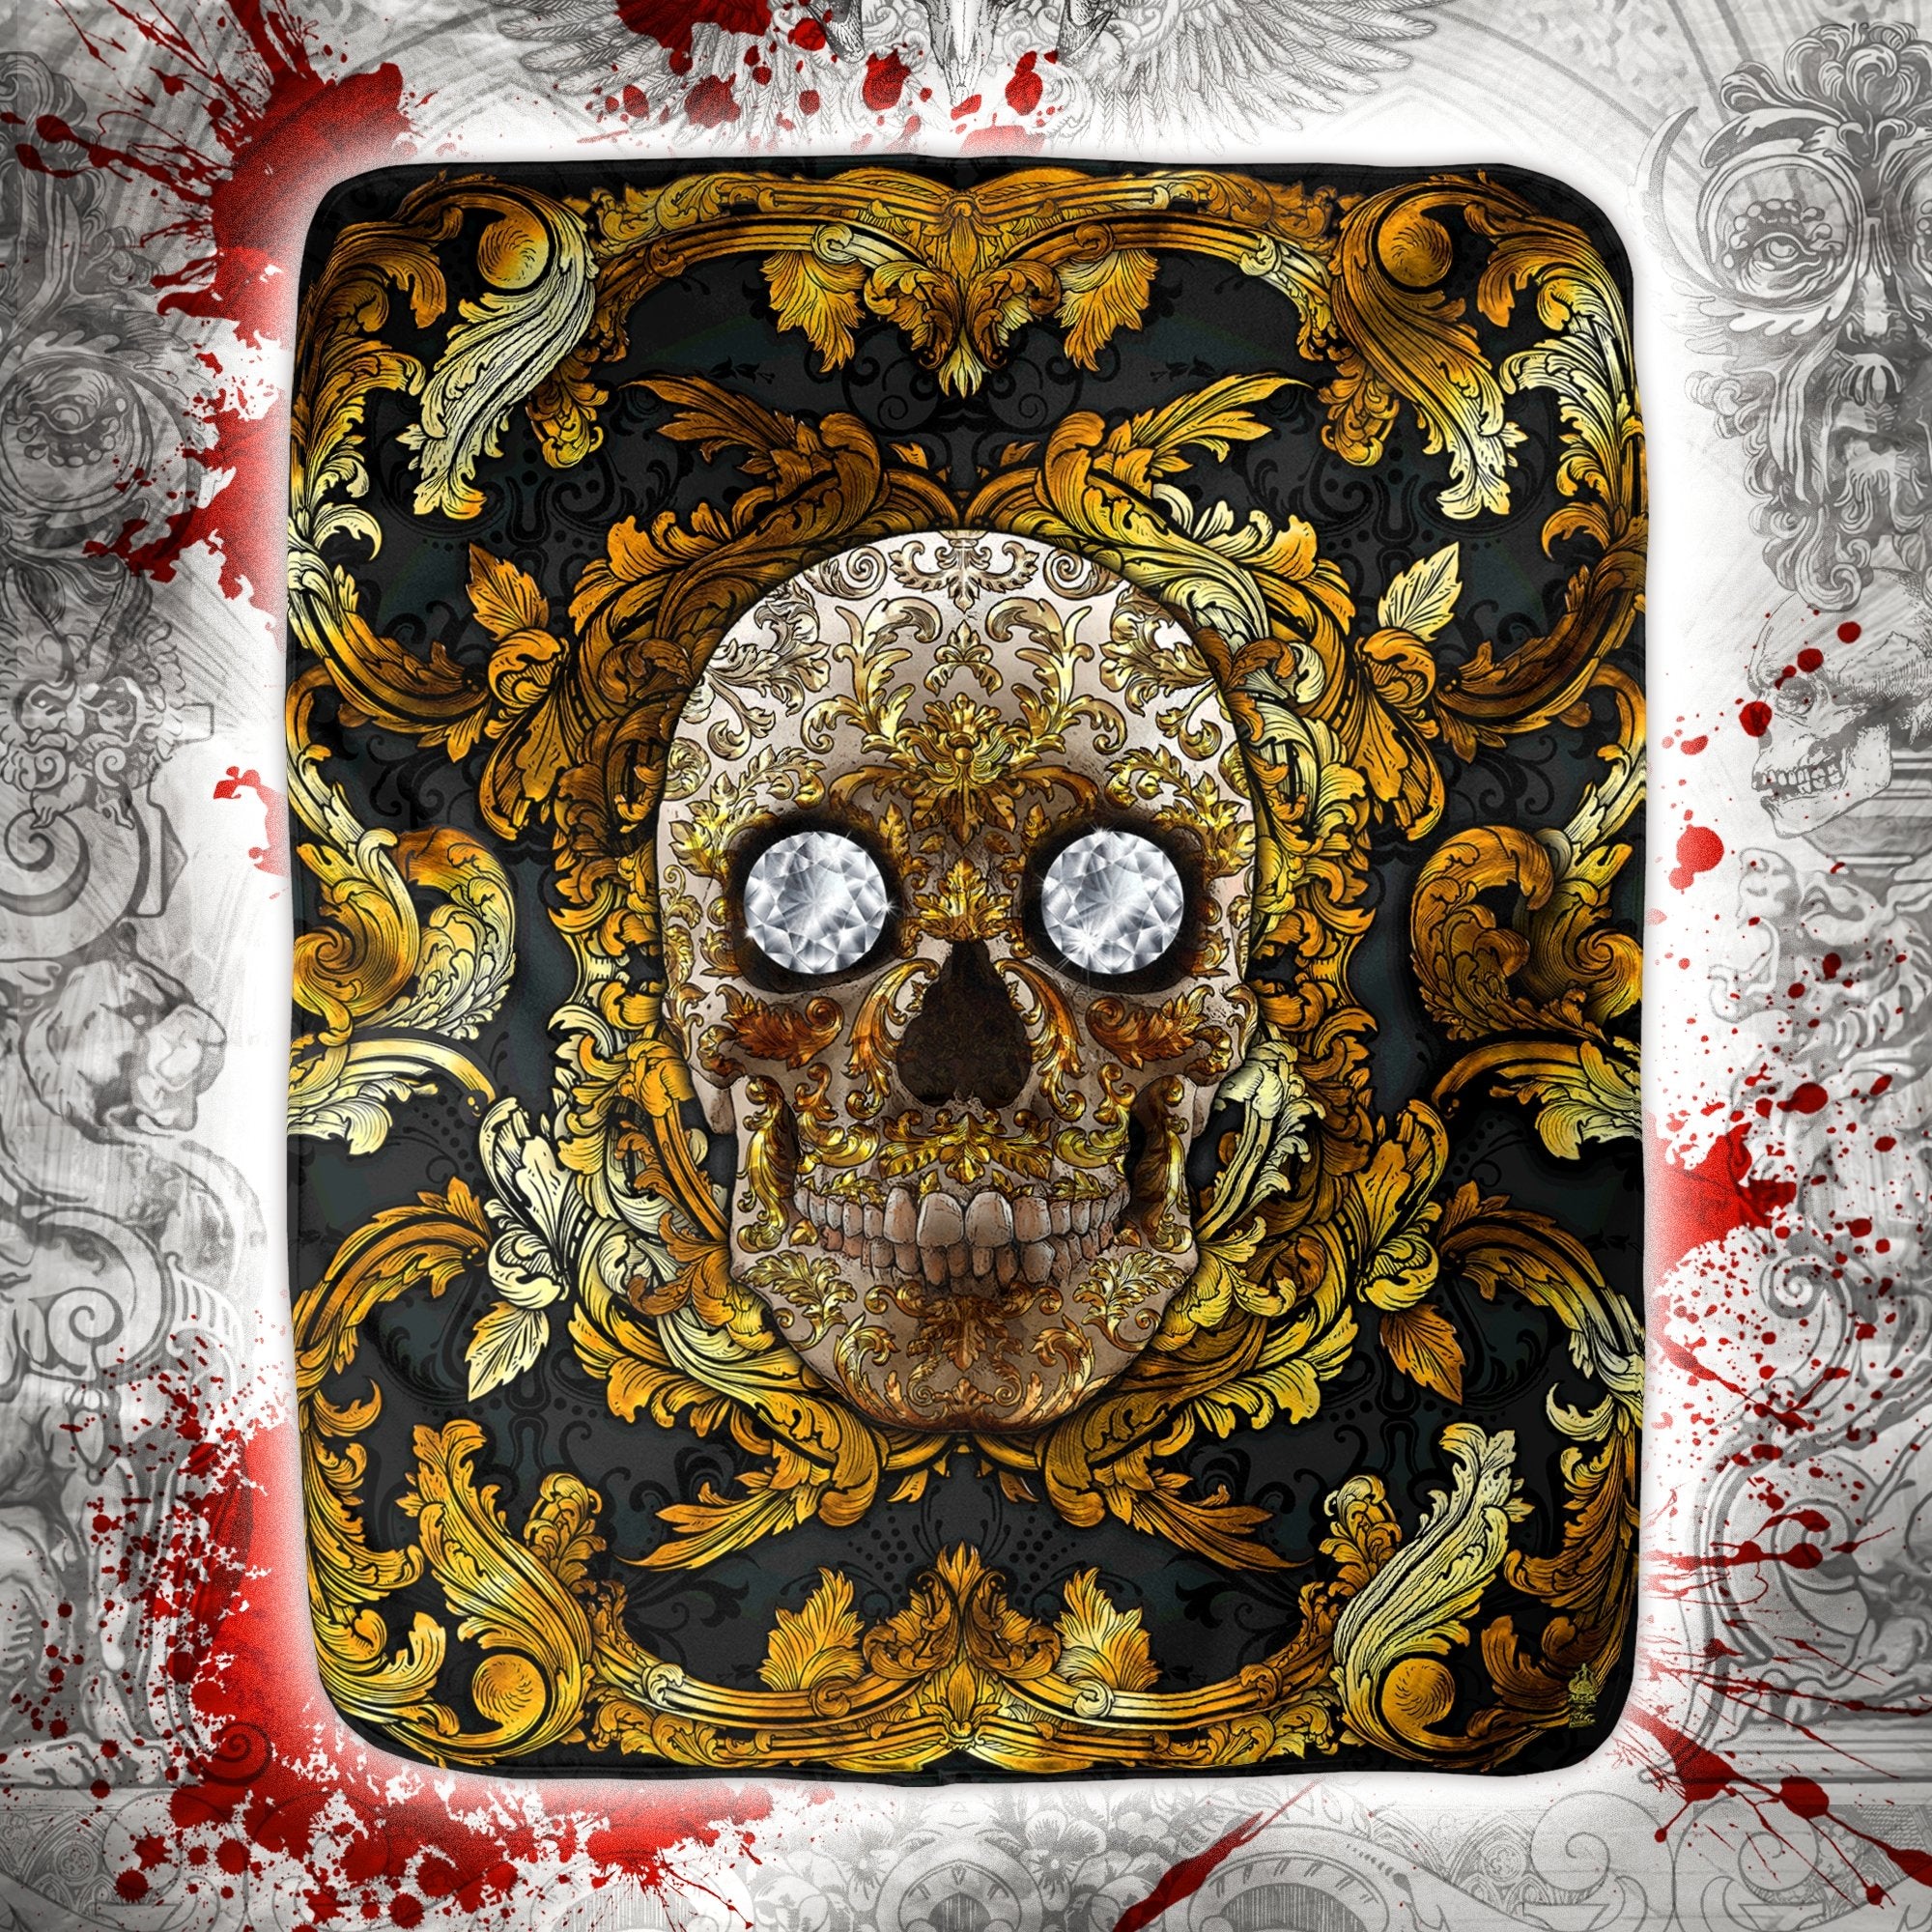 Skull Throw Fleece Blanket, Macabre Art, Baroque Decor - Gold - Abysm Internal